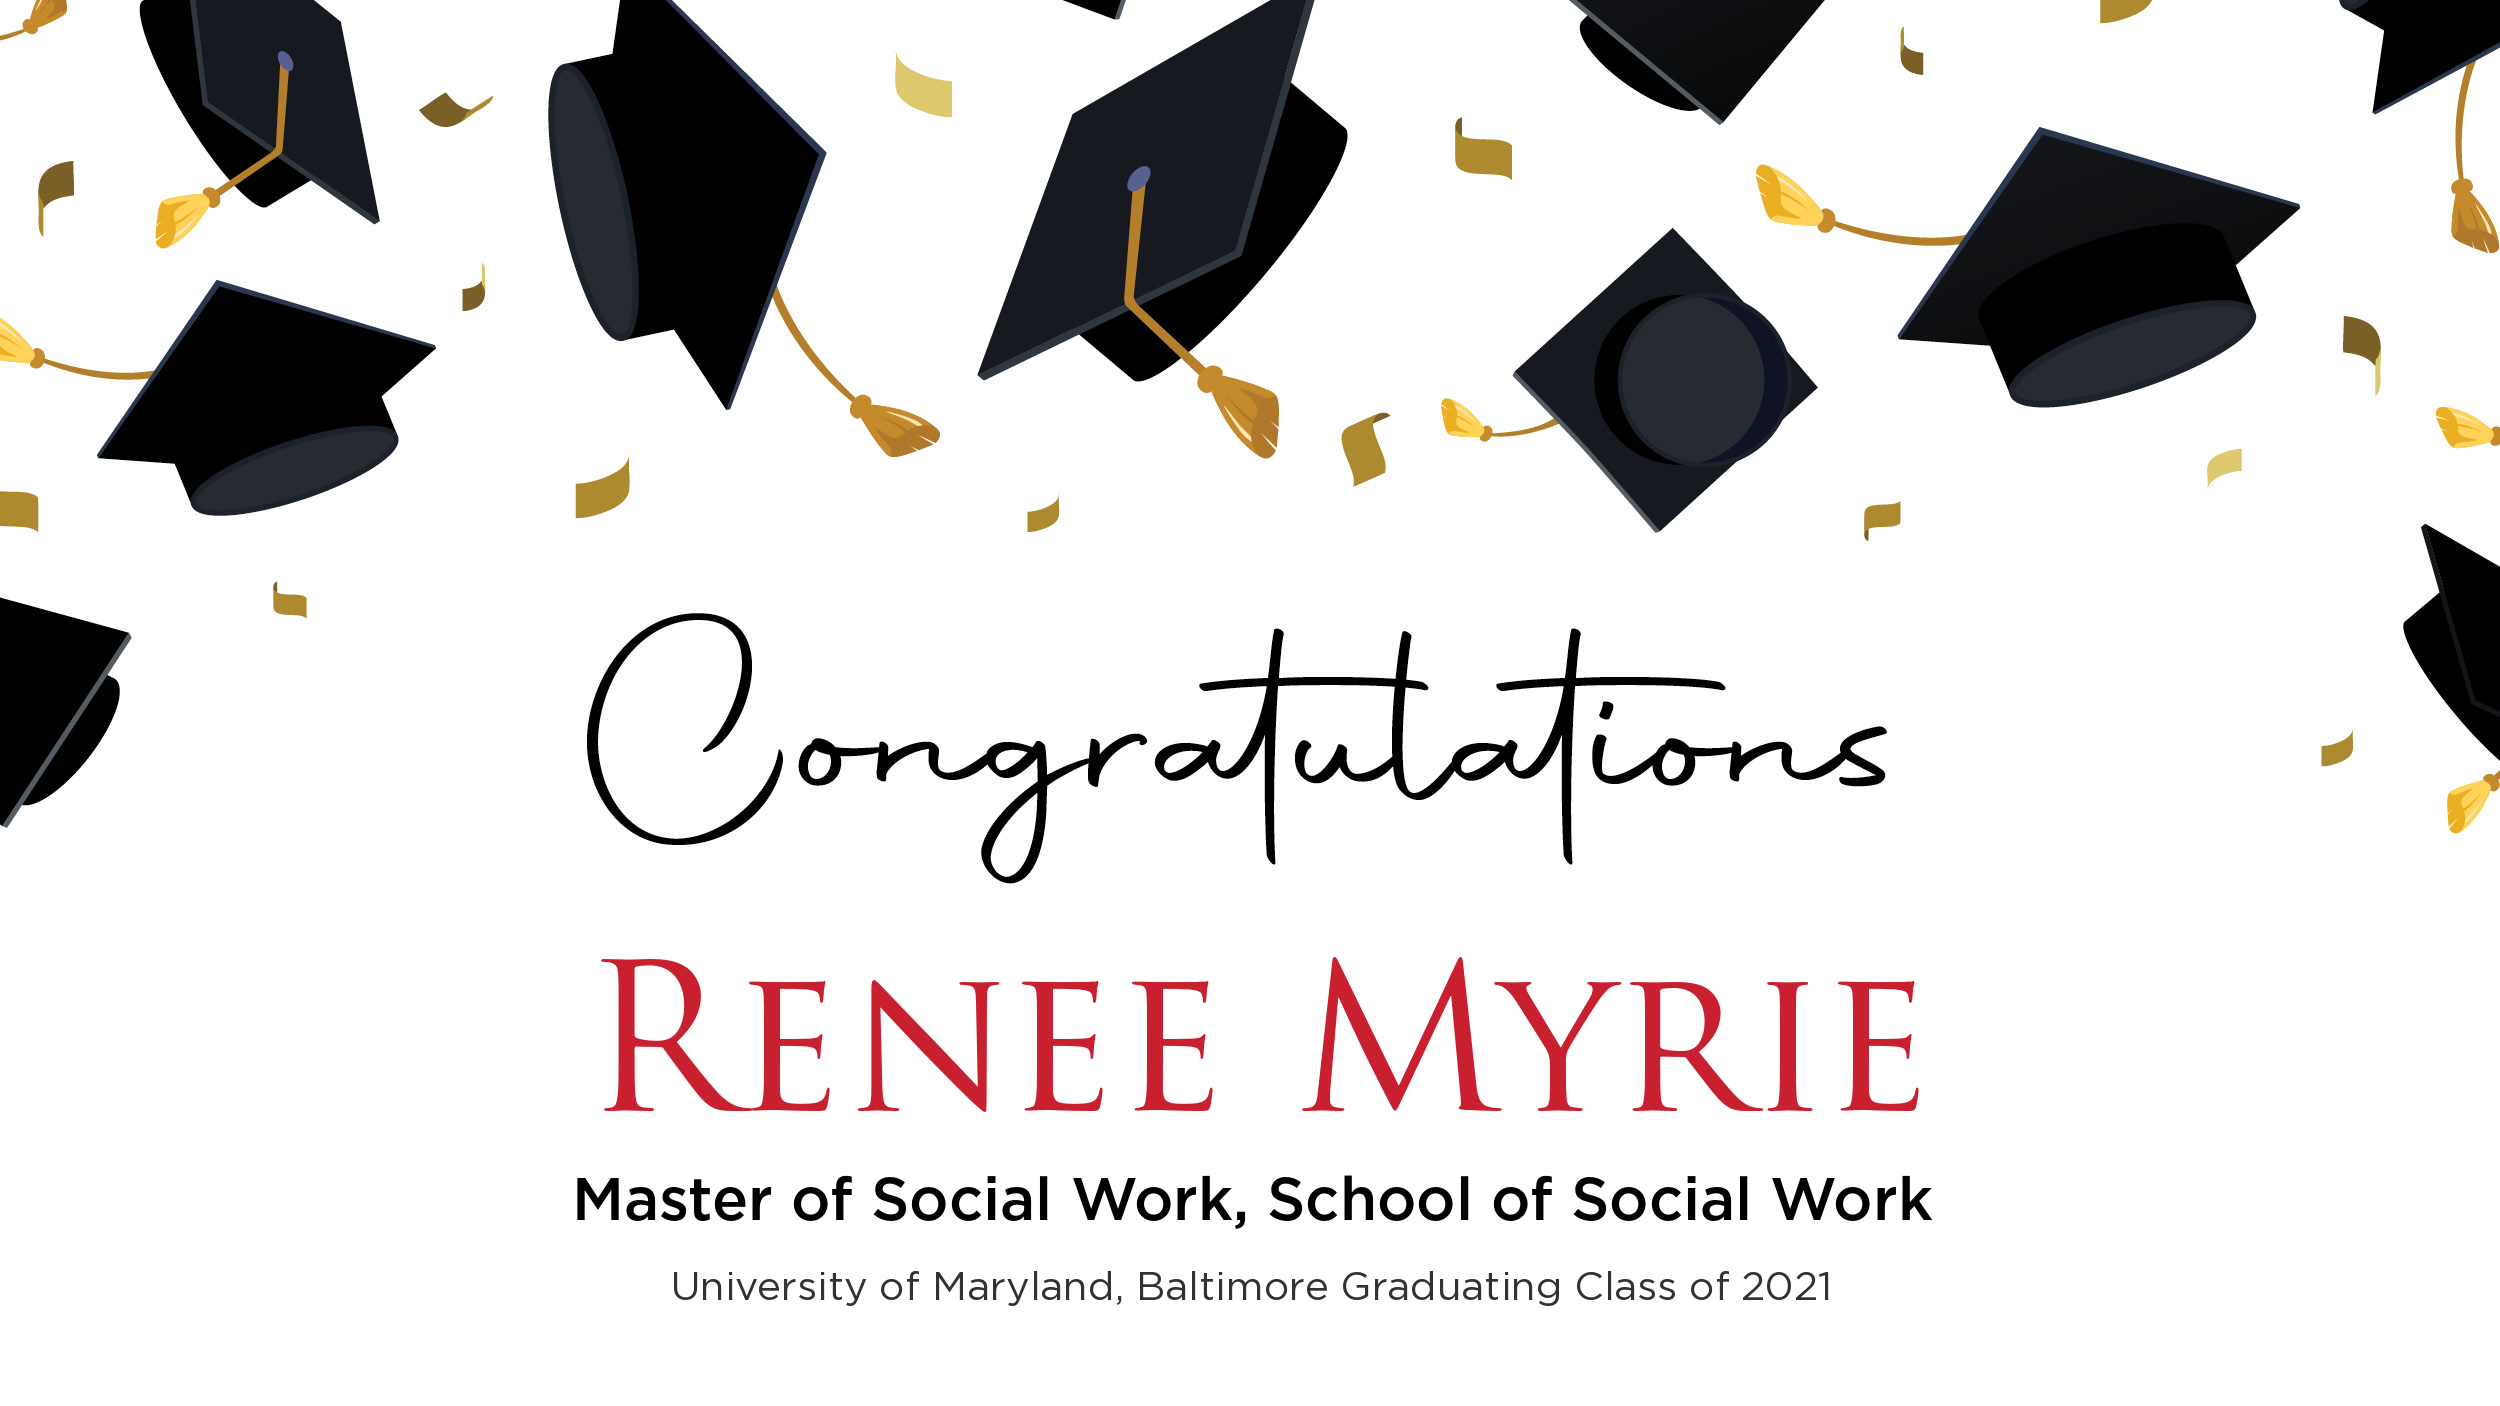 Congratulations Renee Myrie, Master of Social Work